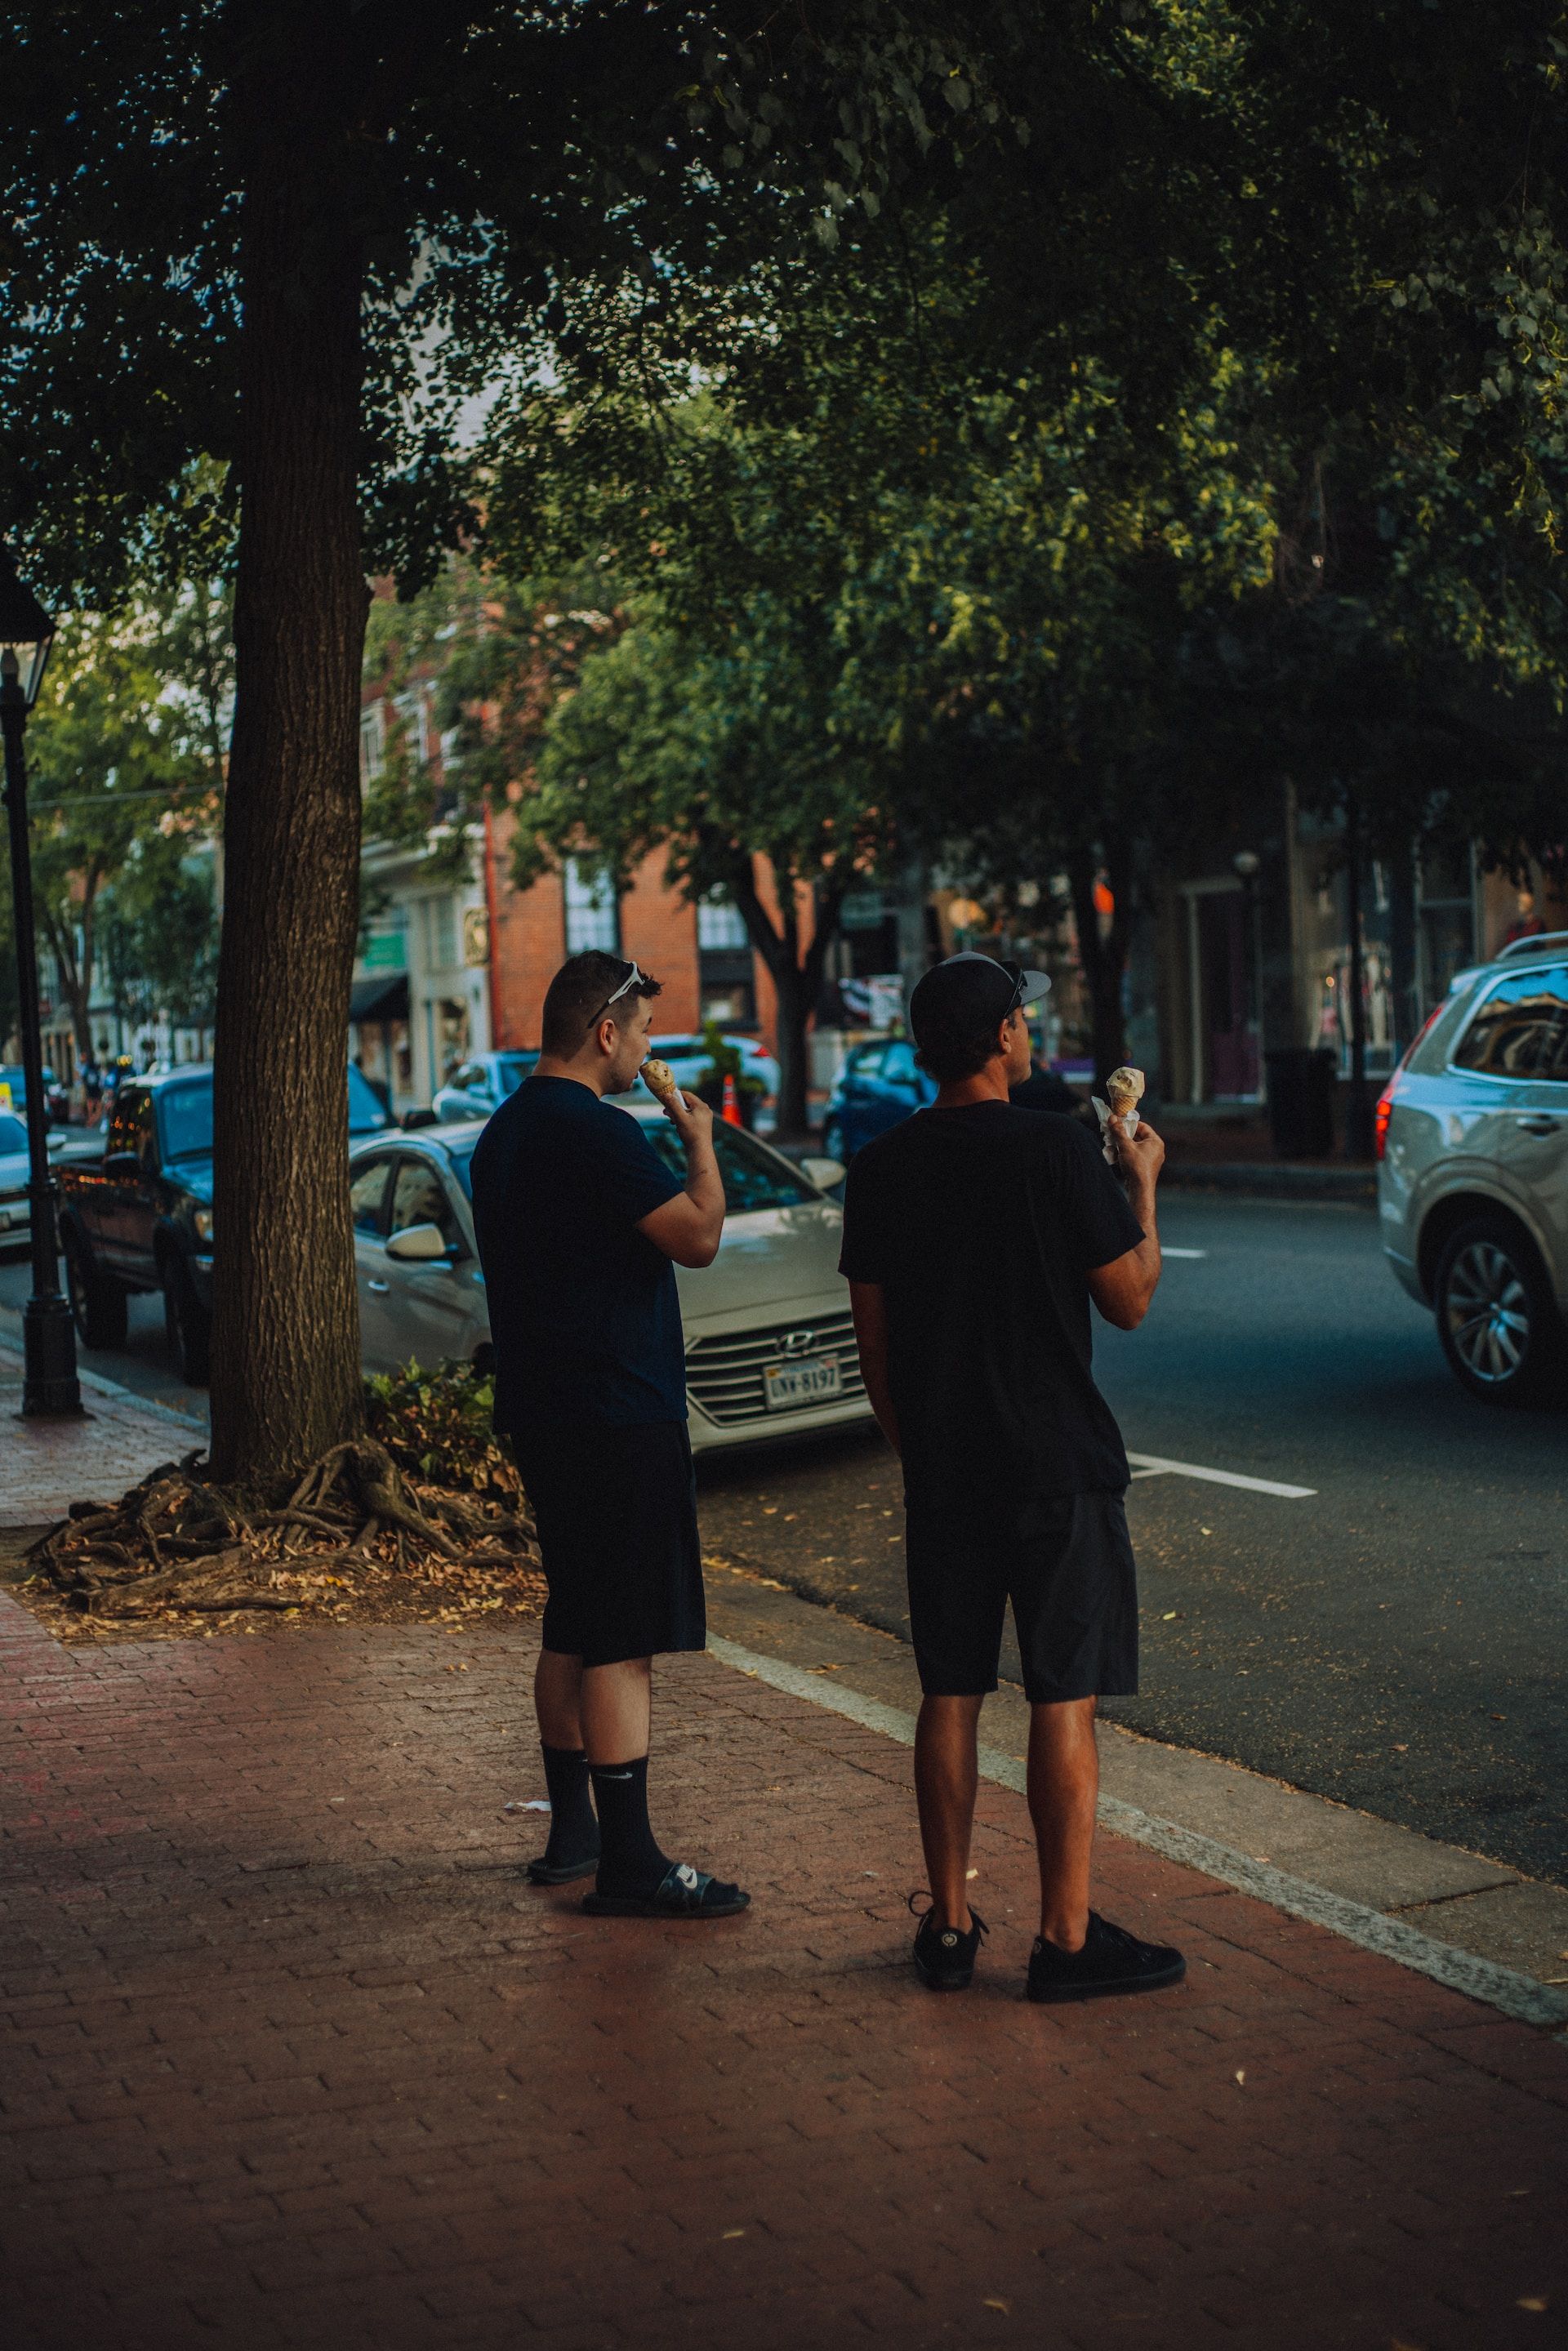 Two guys eating ice cream in downtown Fredericksburg, VA